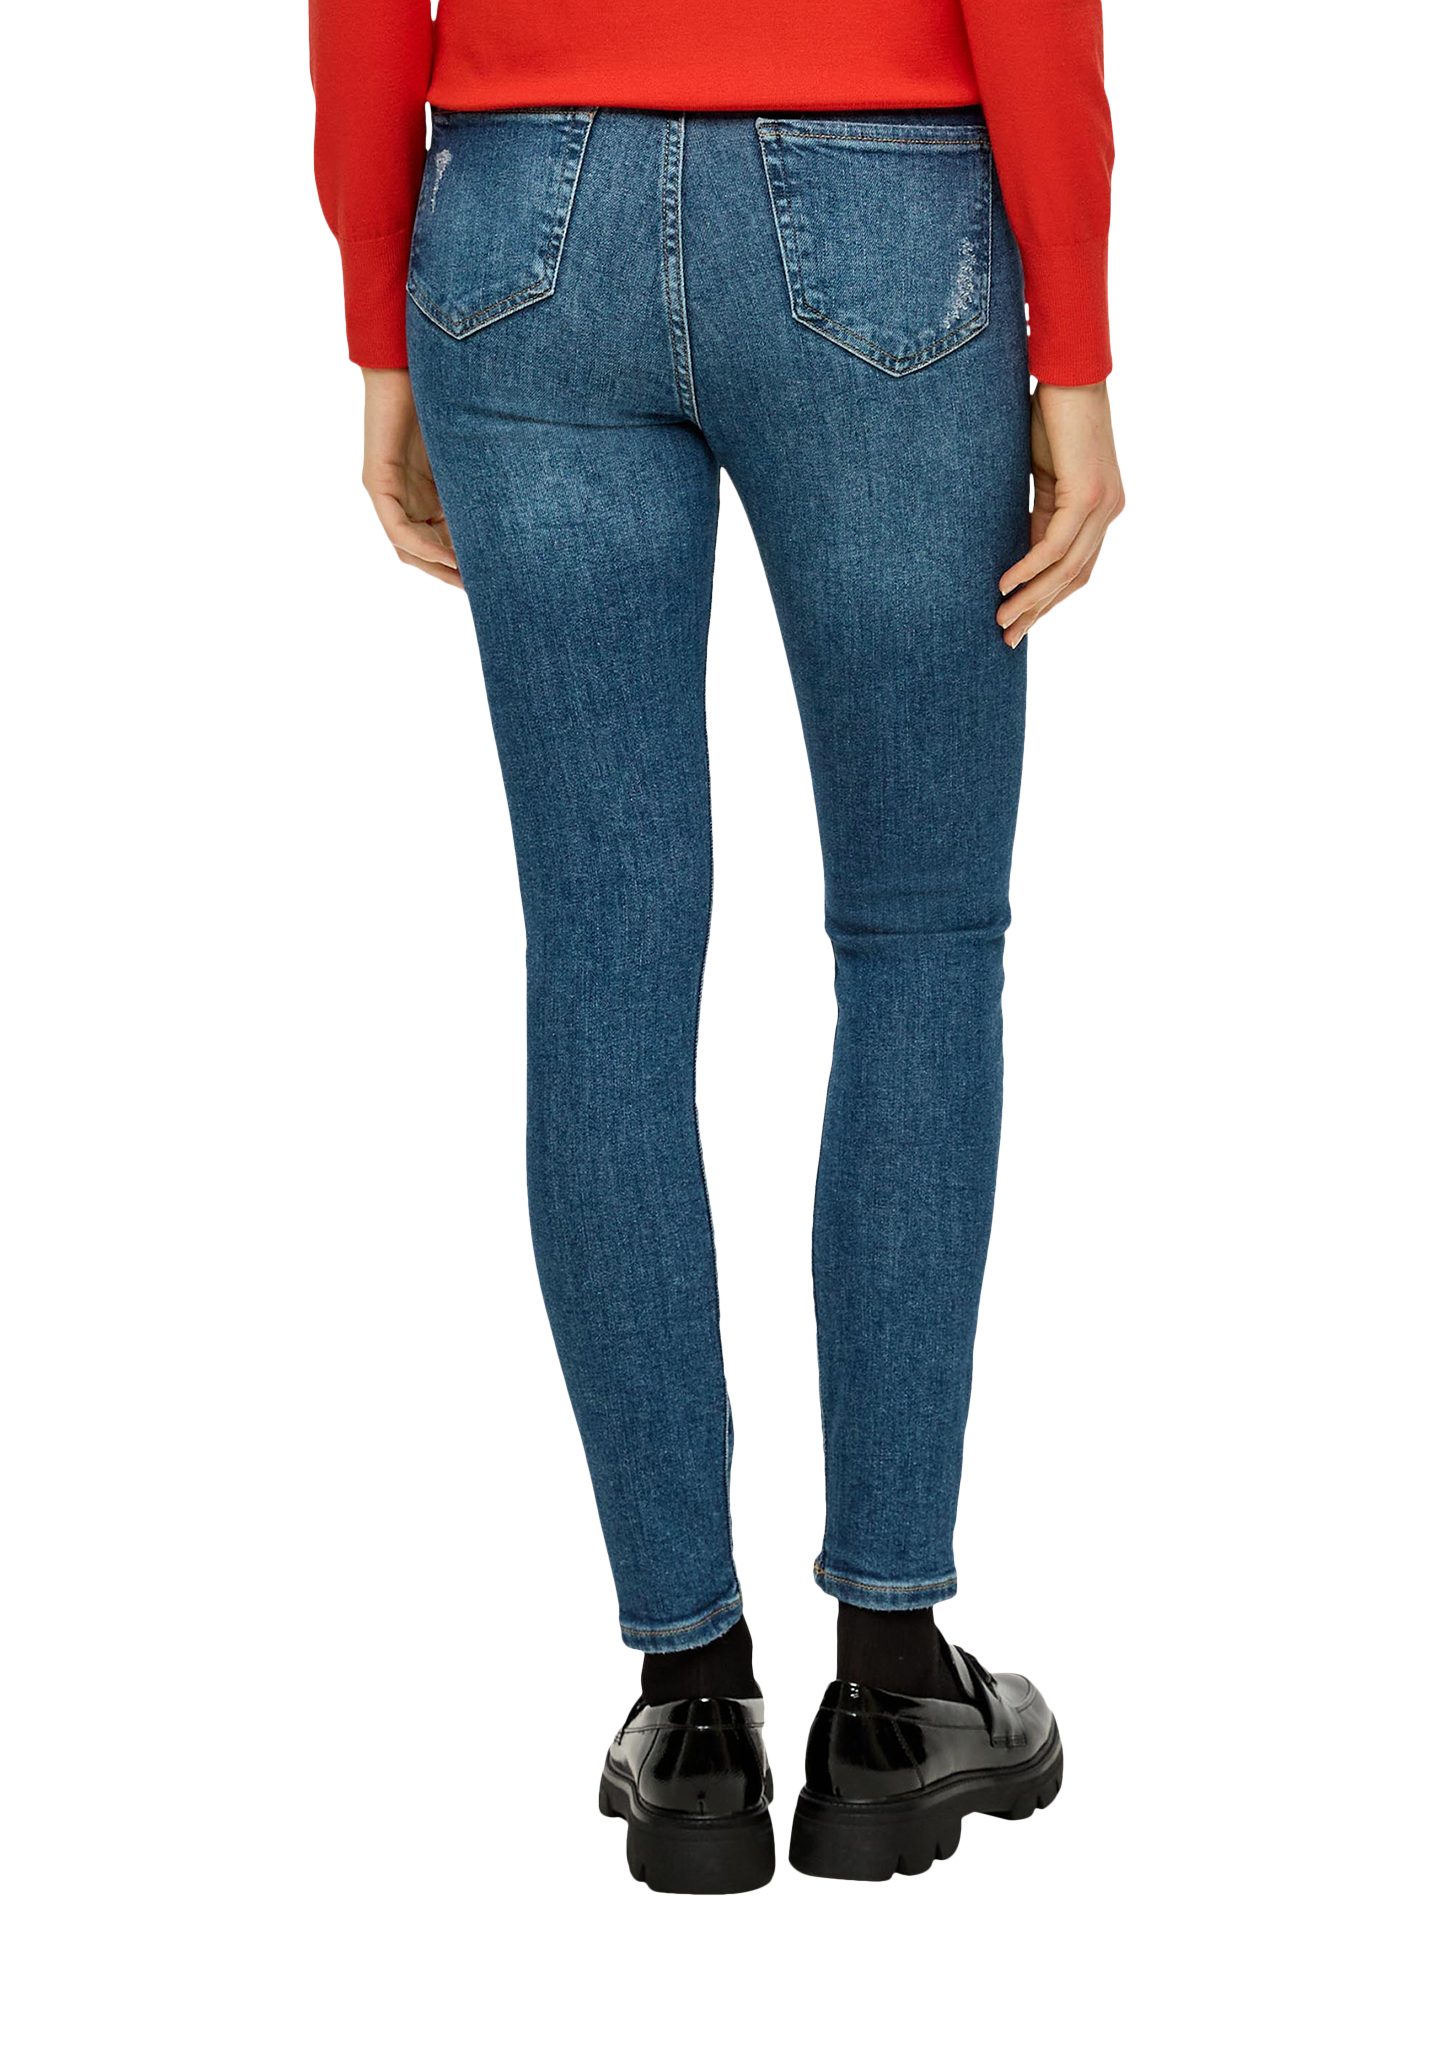 Leder-Patch, / s.Oliver Skinny Fit Jeans High / / Nieten, Skinny Izabell Rise 7/8-Jeans Waschung Leg blau